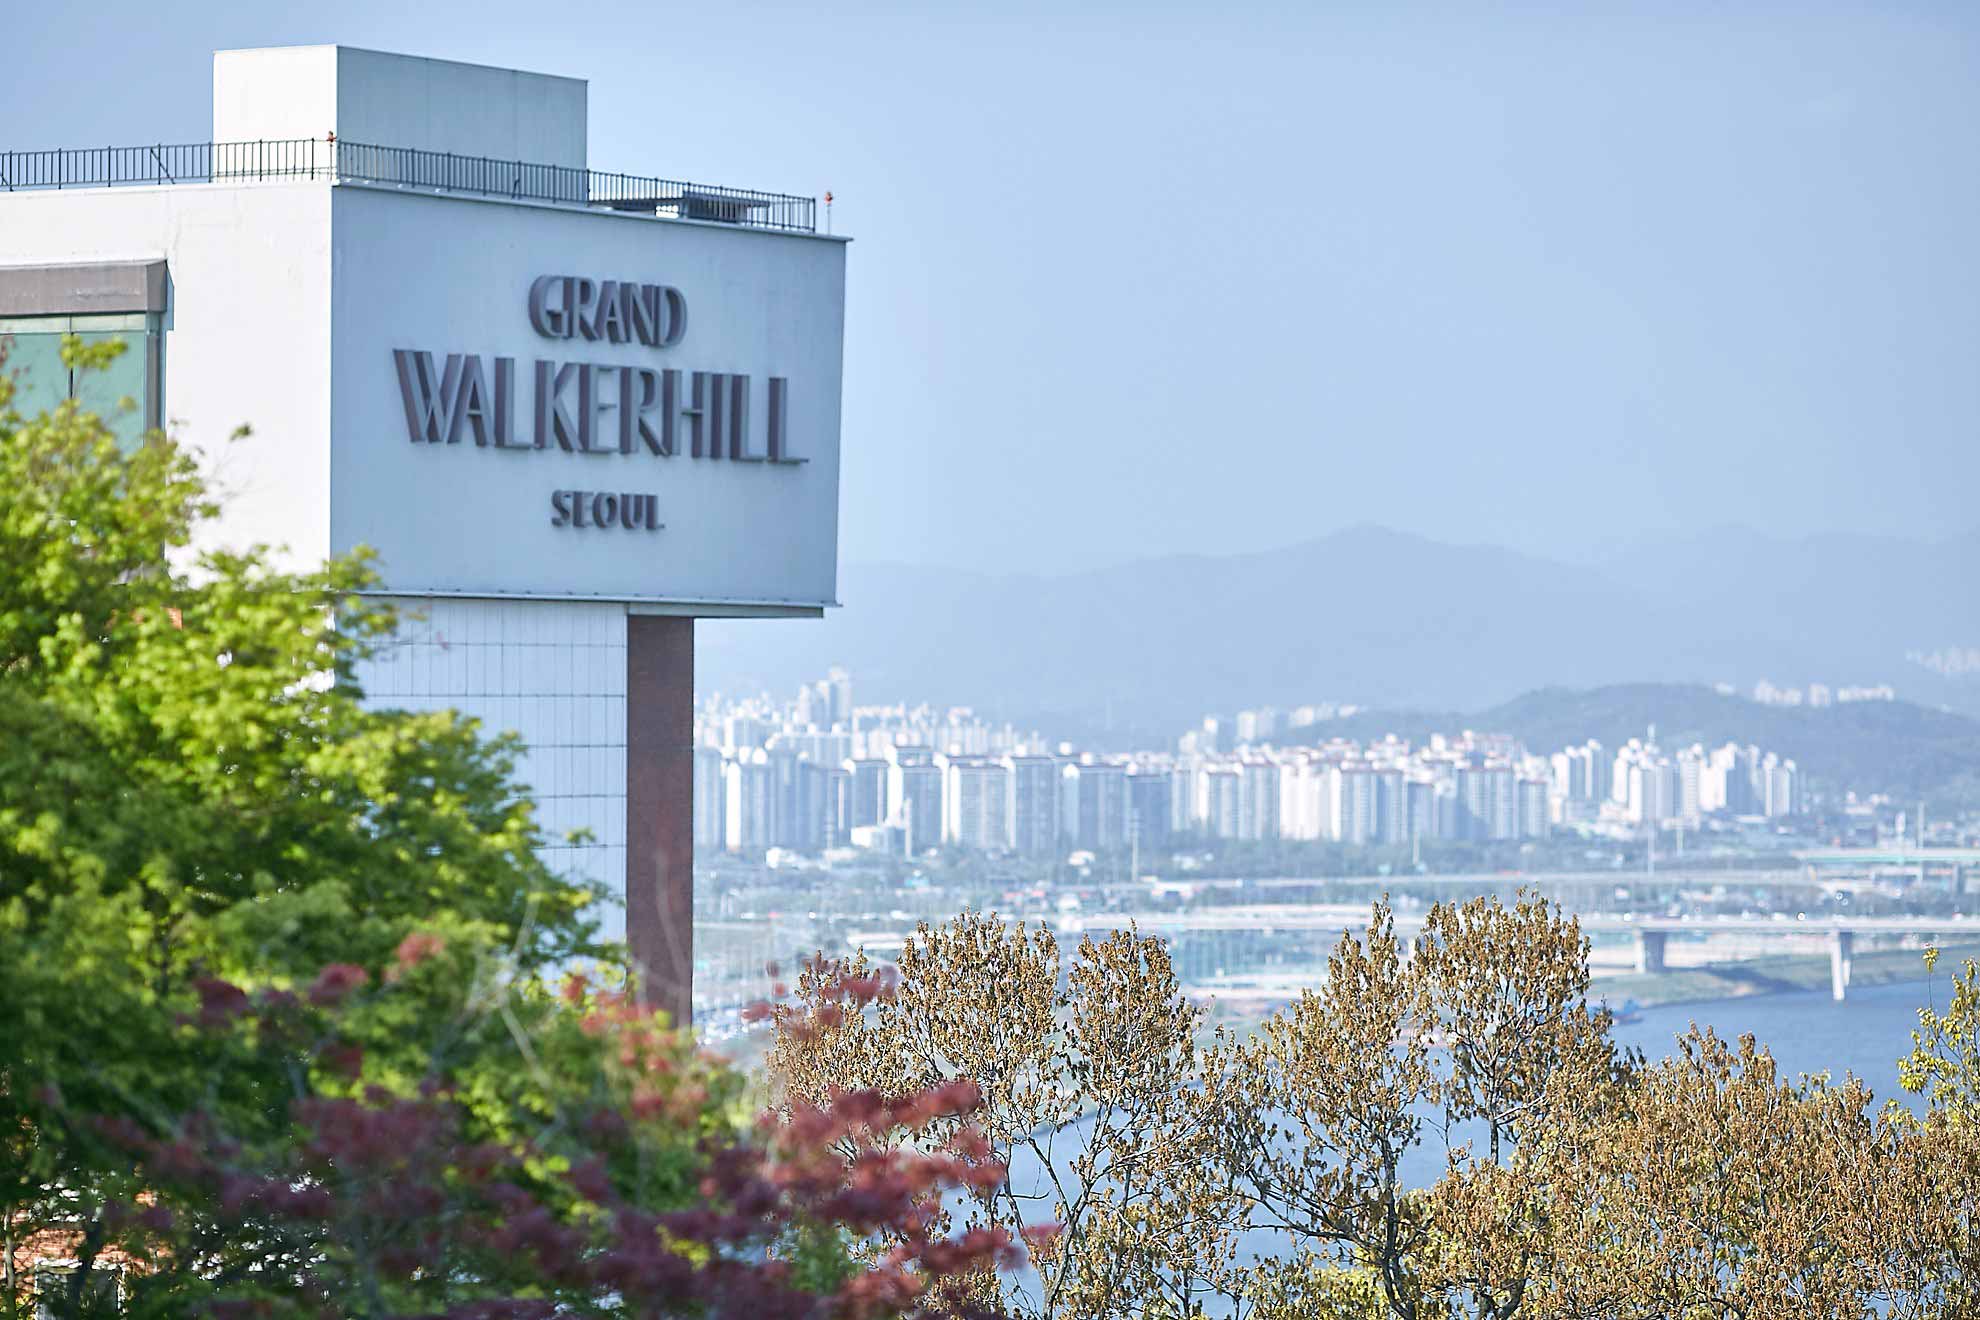 Grand Walkerhill Seoul